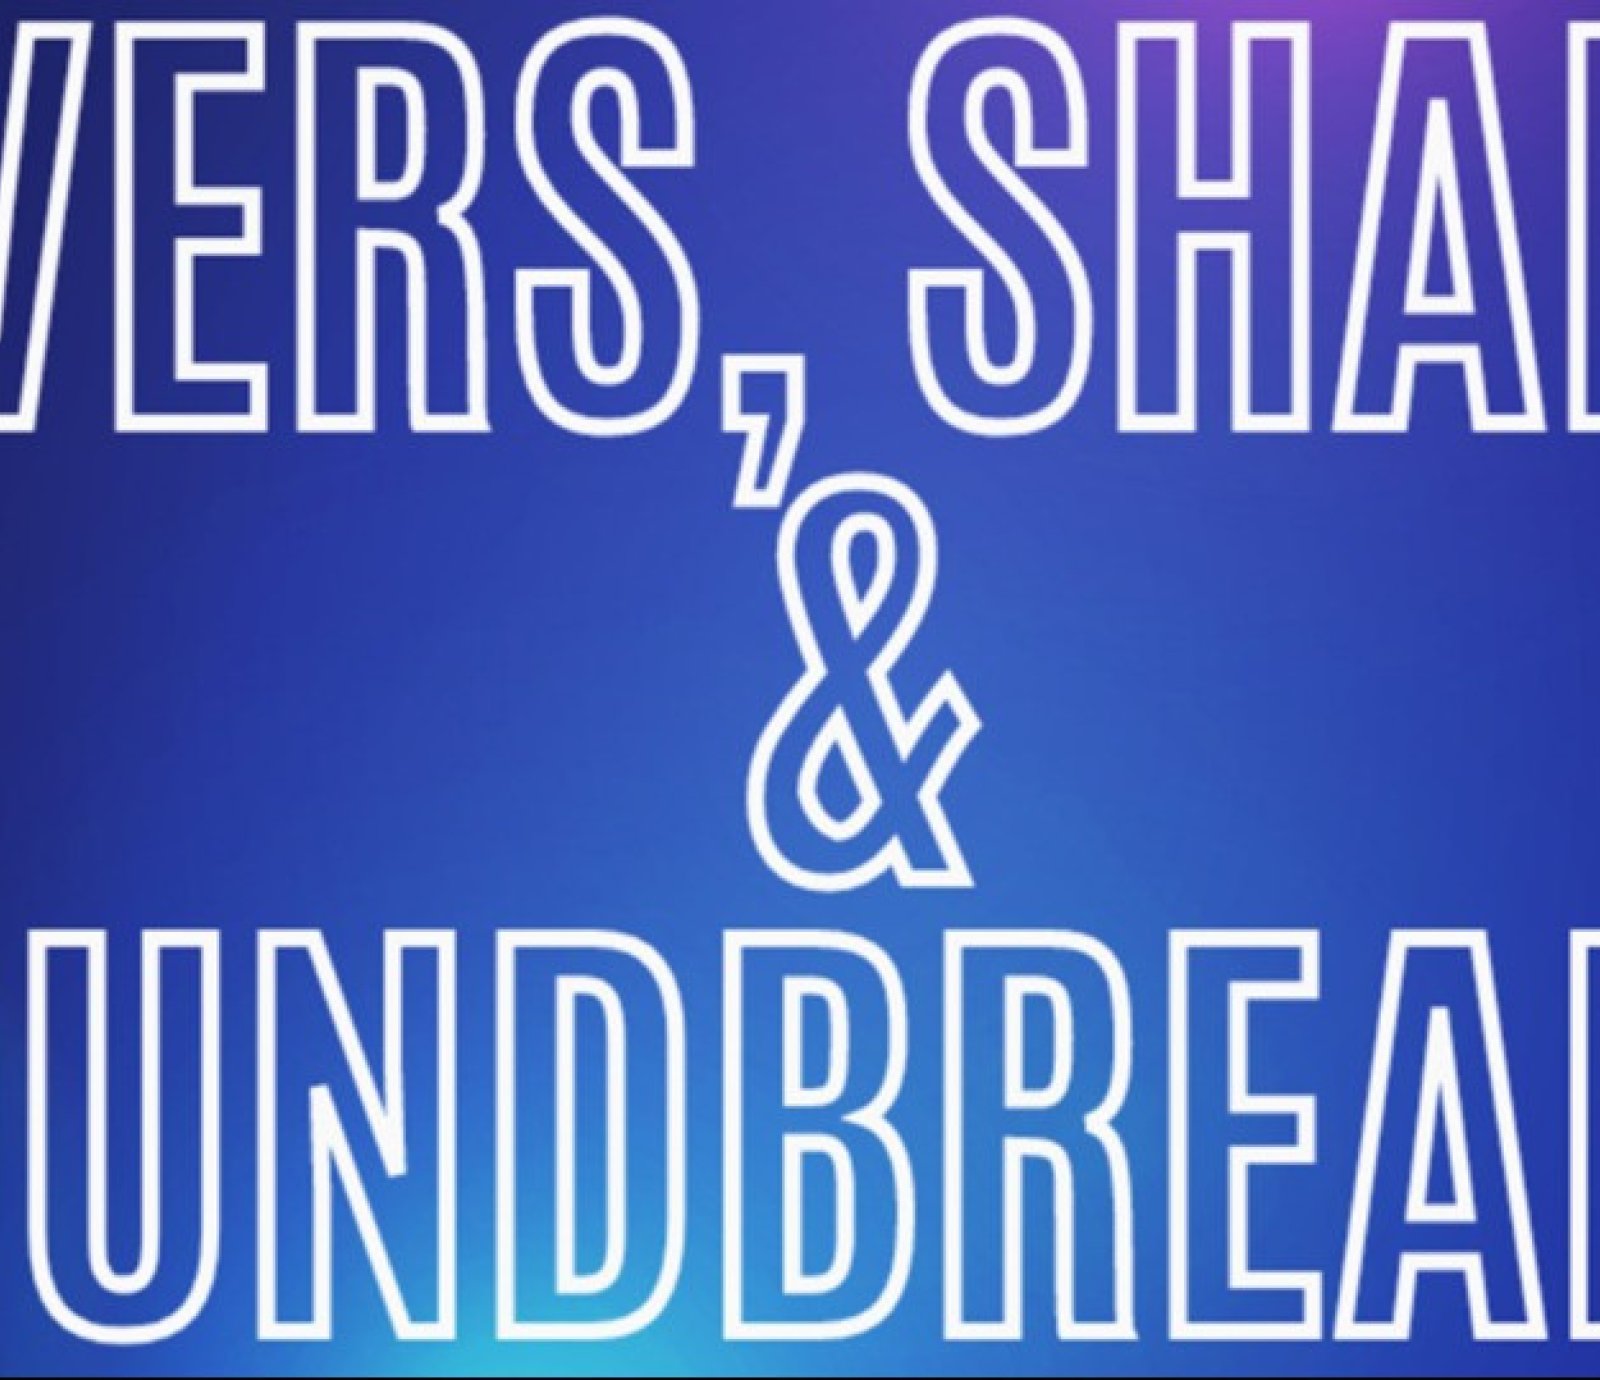 Movers, Shakers & Groundbreakers